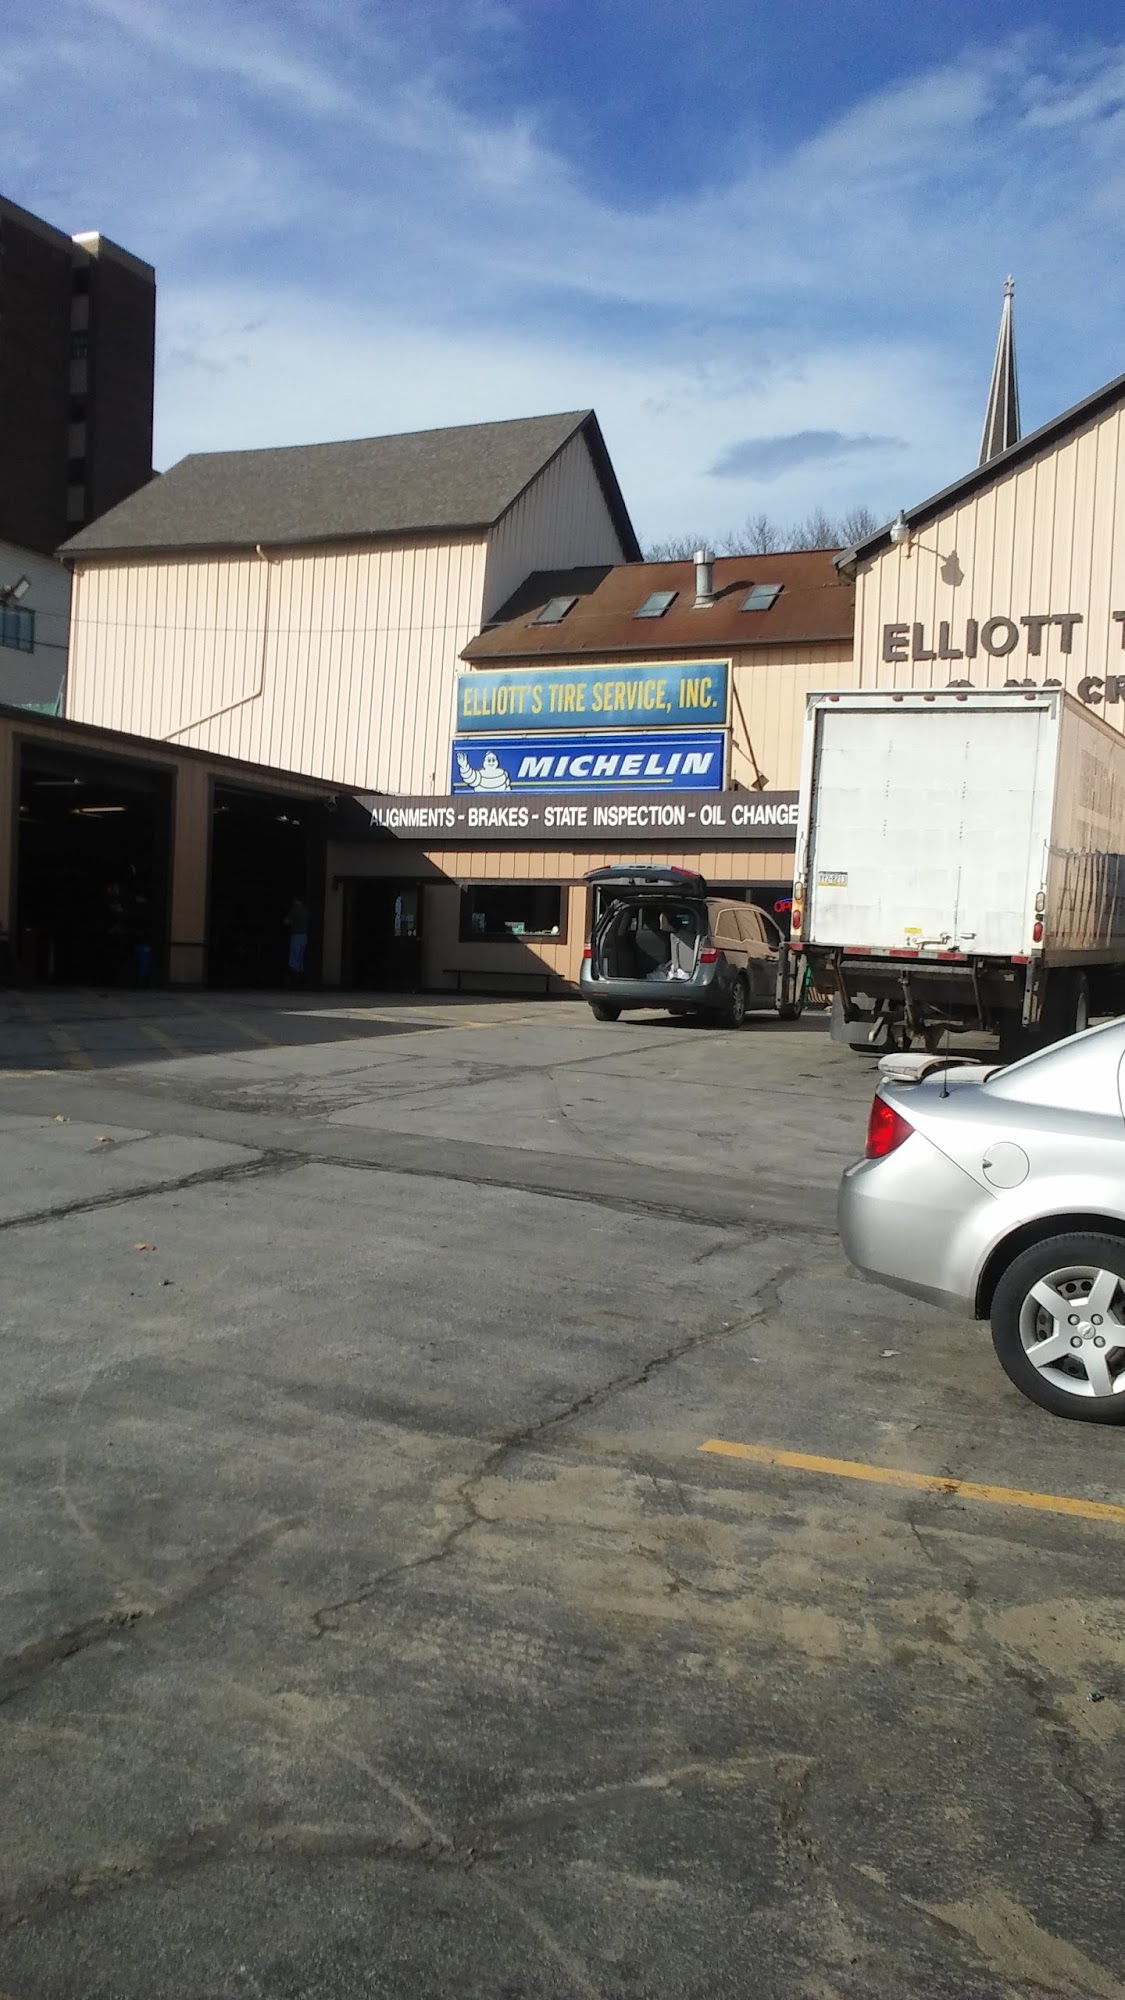 Elliott's Tire Service